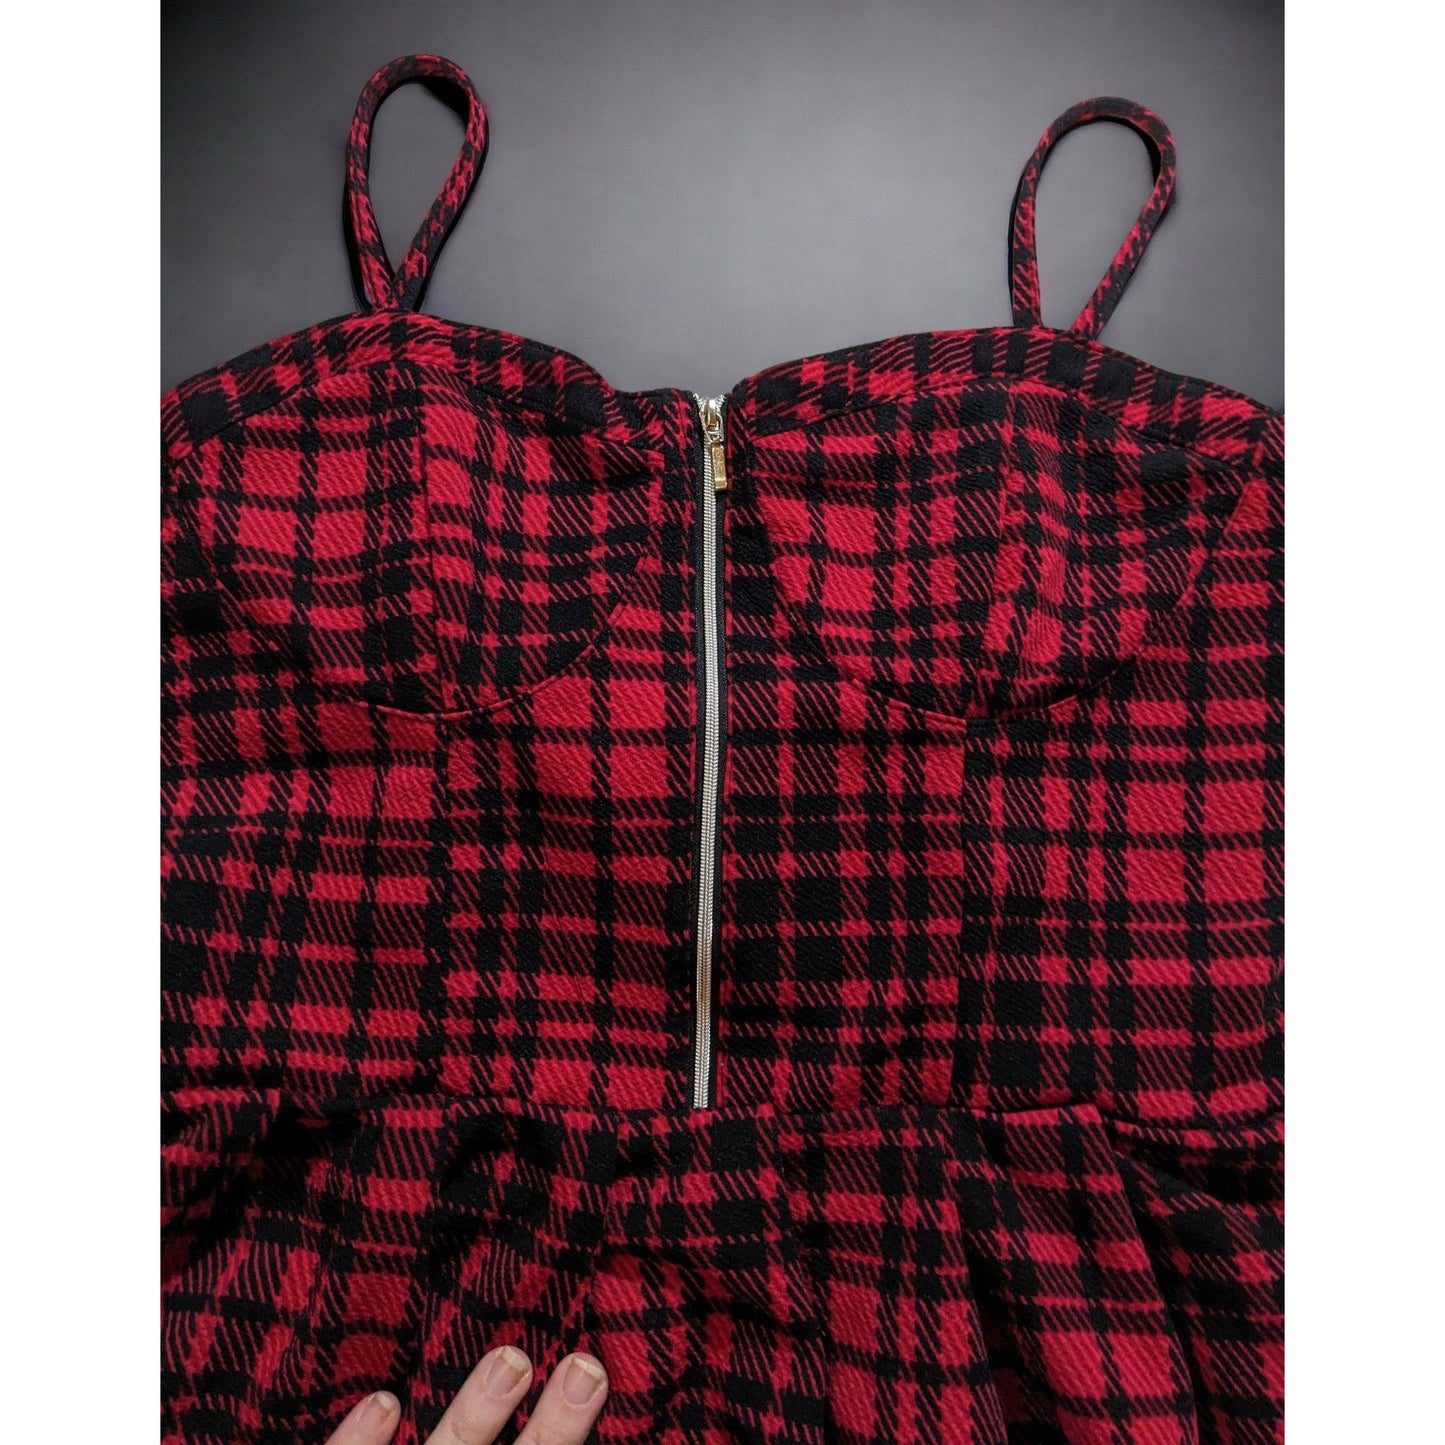 Hot Topic Black And Red Plaid Zipper Dress